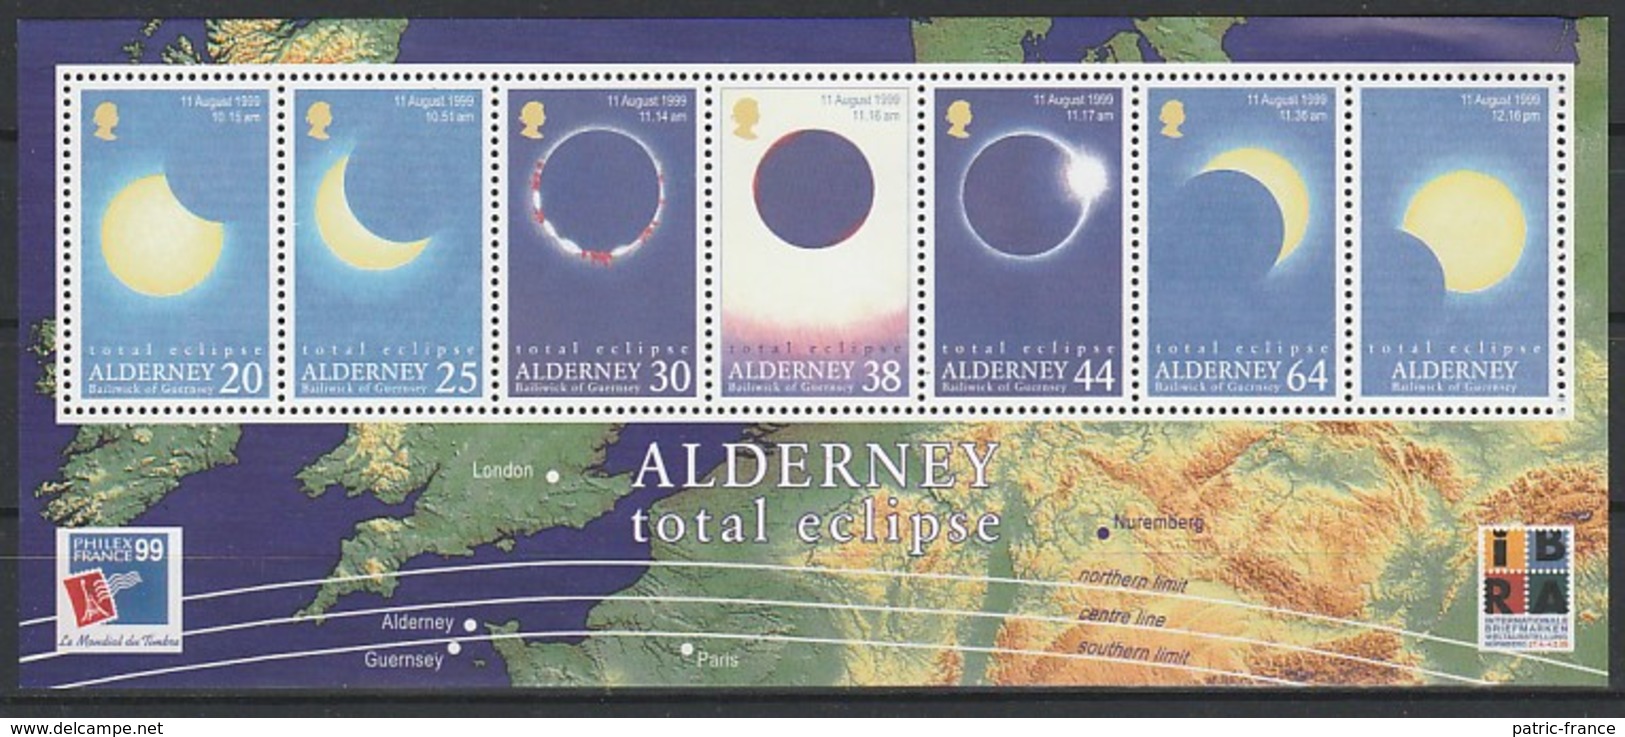 AURIGNY ALDERNEY 1999 - BF6** Eclipse Solaire Totale (cote 11.00) - Alderney